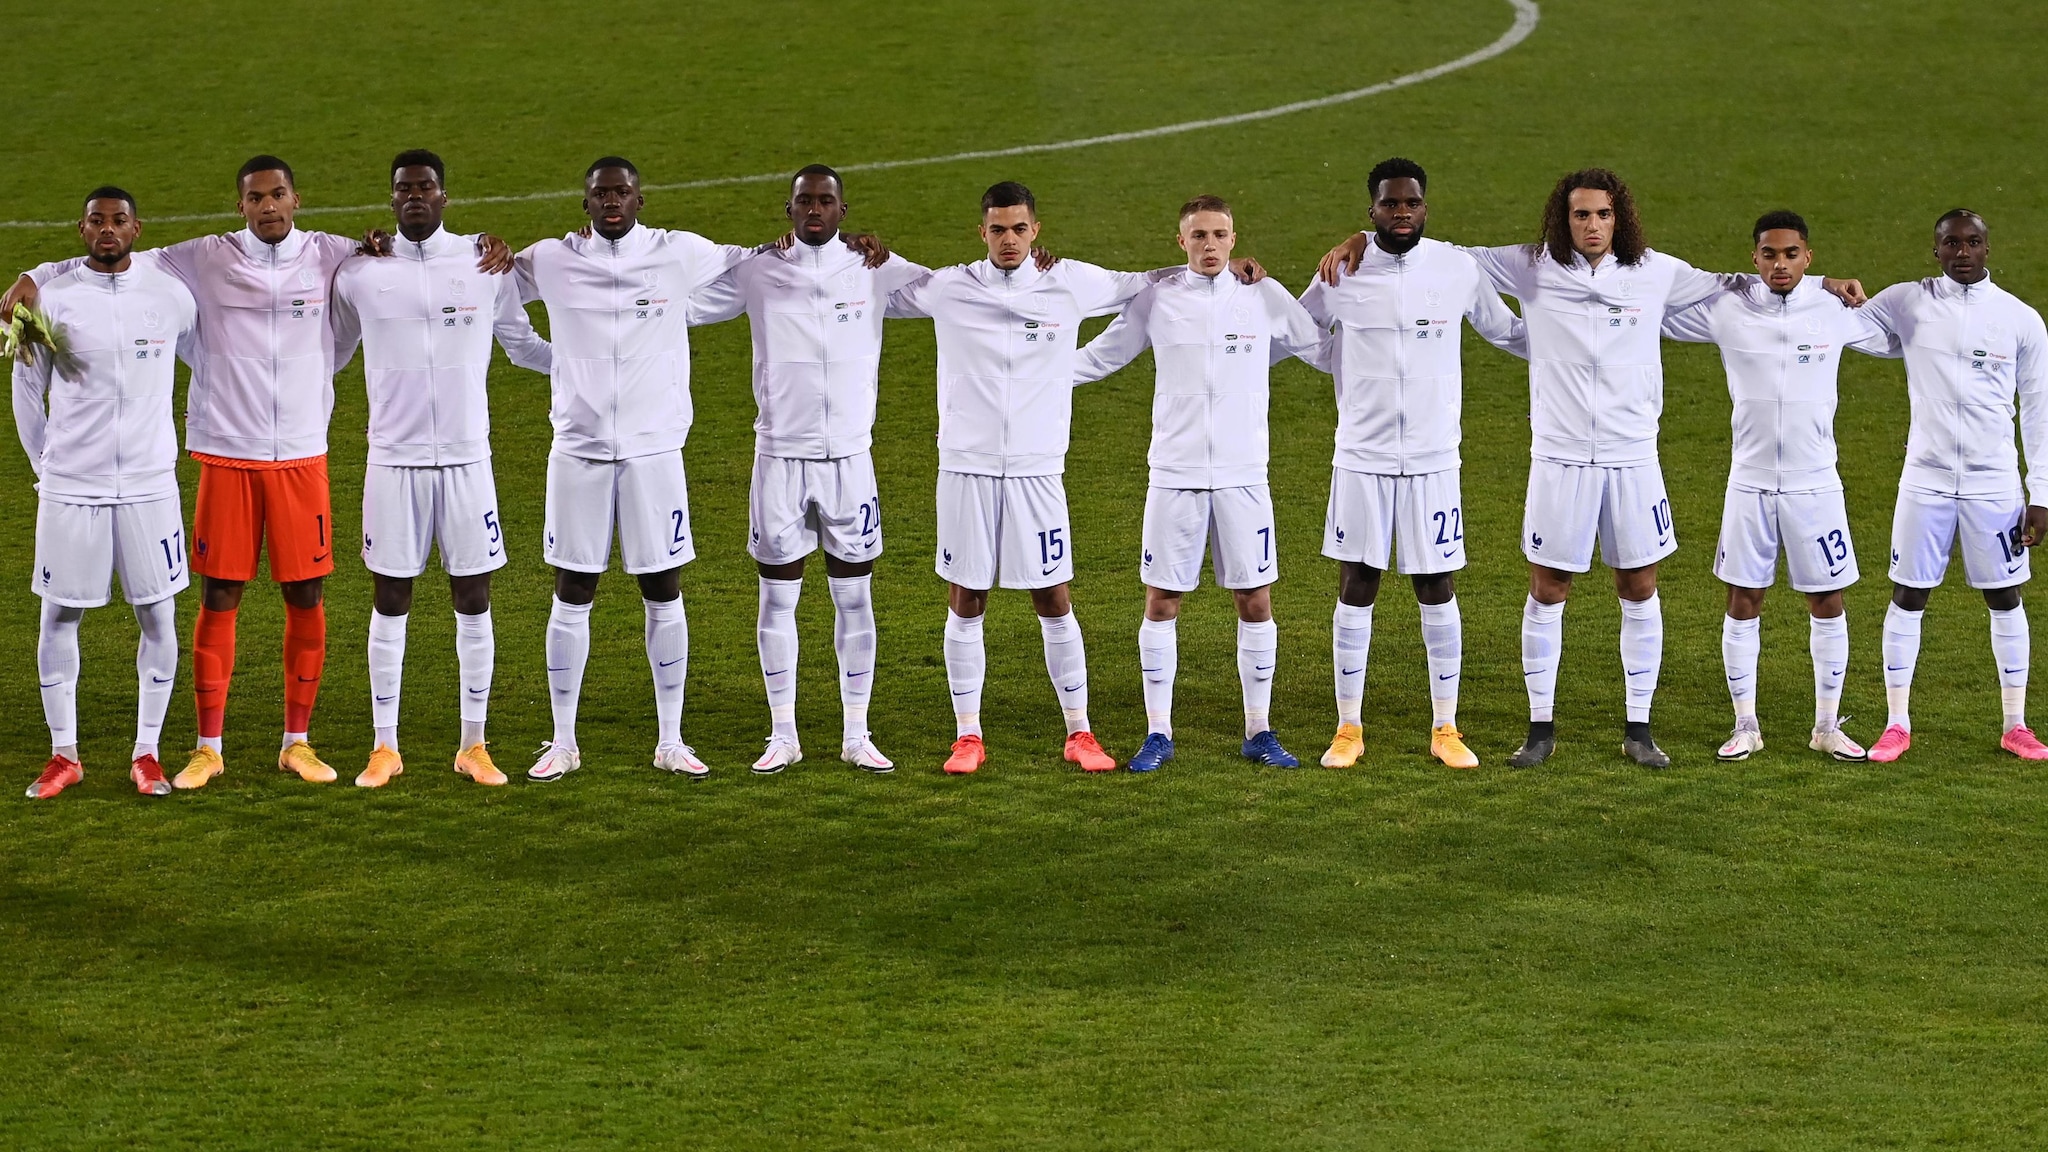 France euro 2021 squad